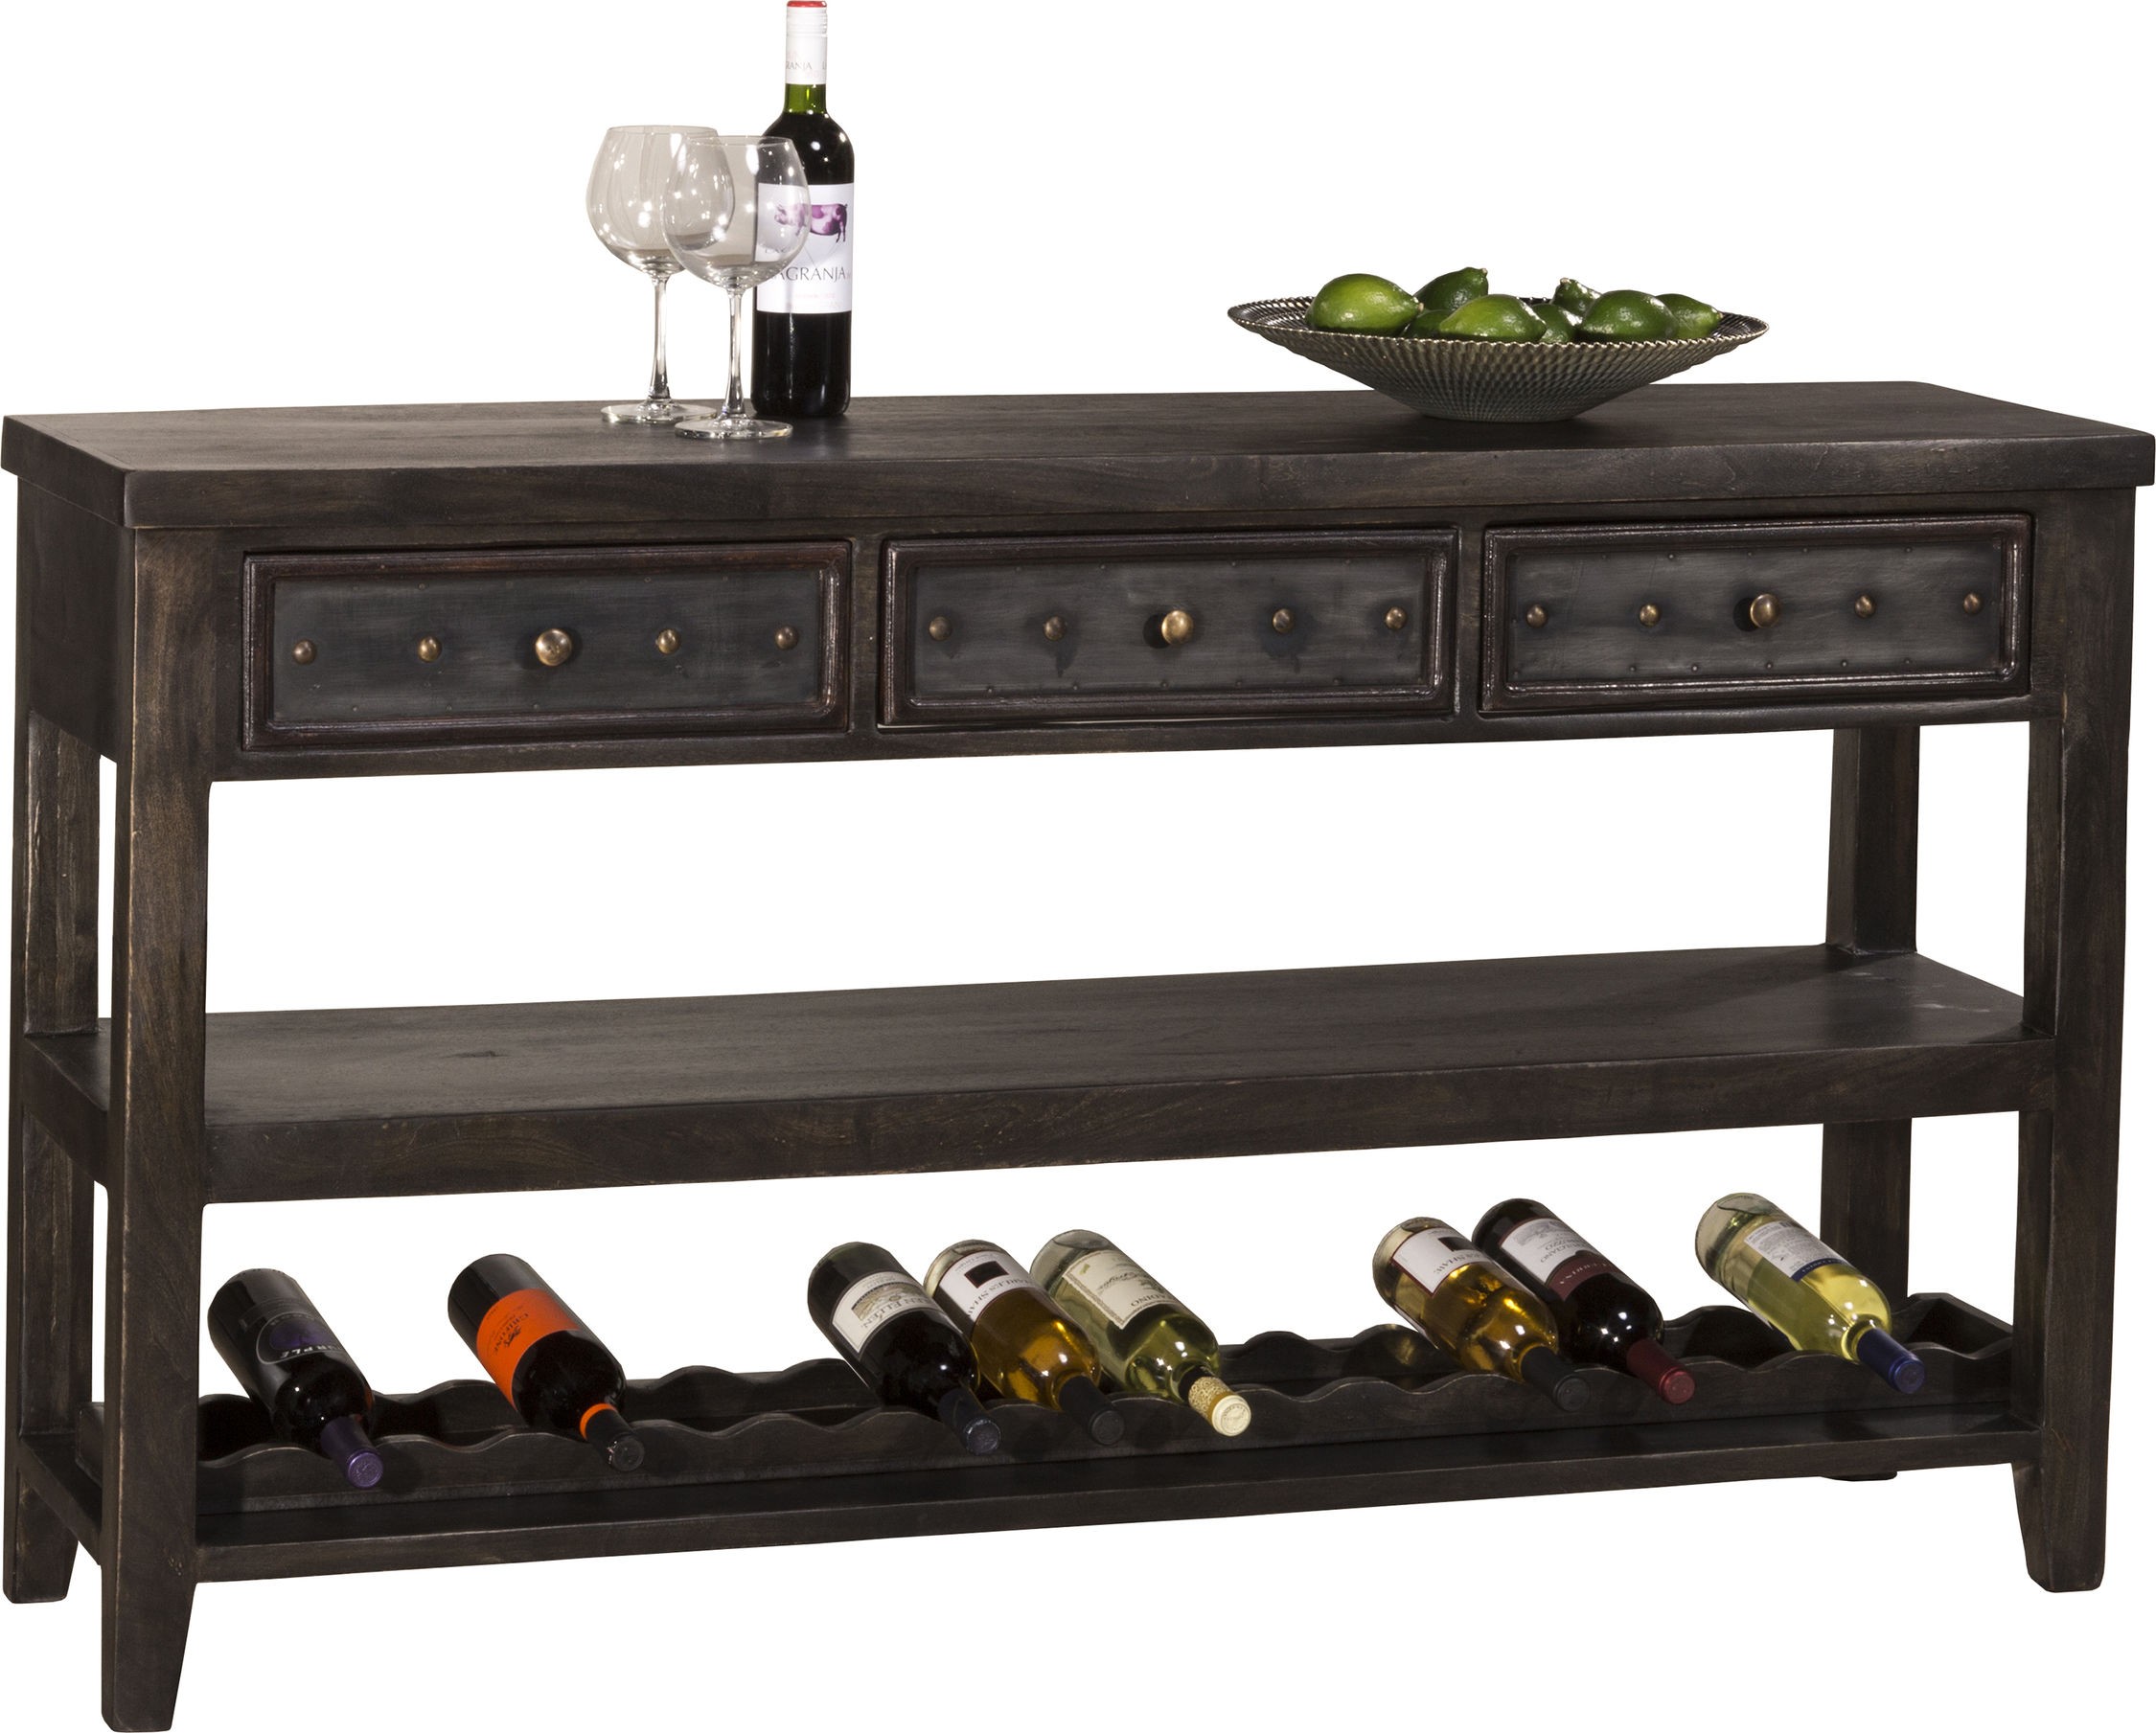 Bolt sofa table with wine rack hedgeapple